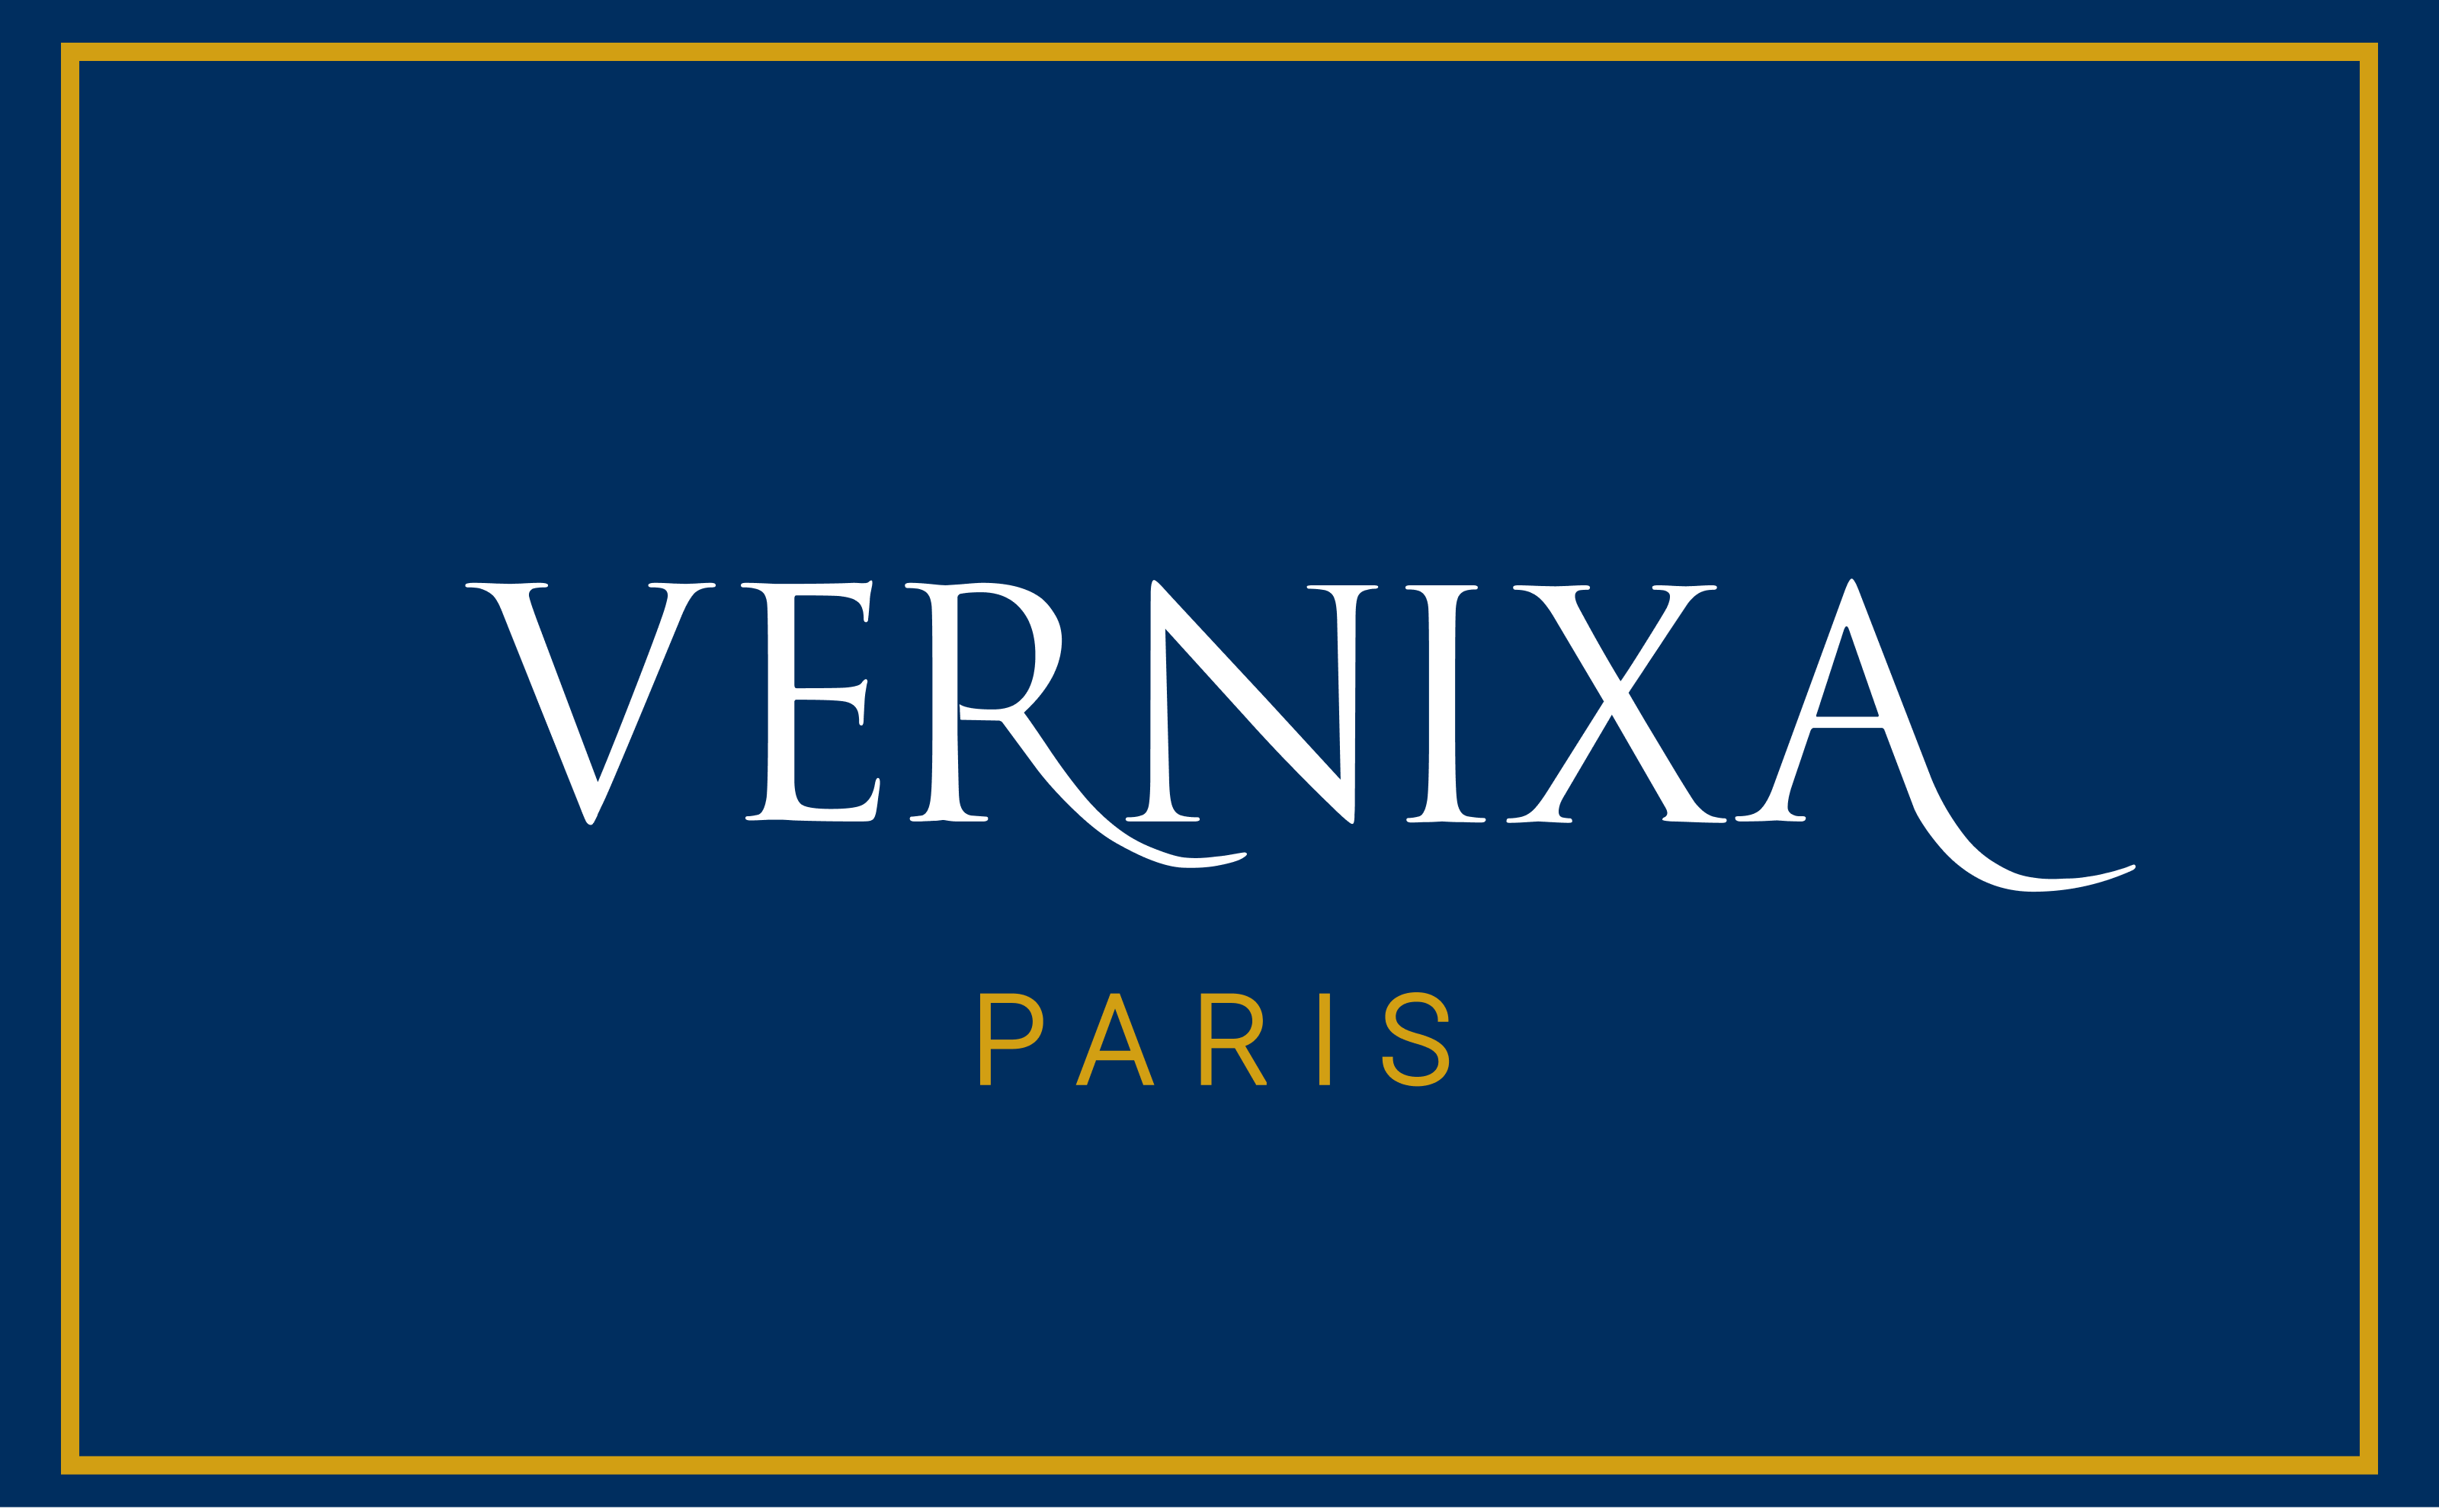 Vernixa Paris Officiel - Logo